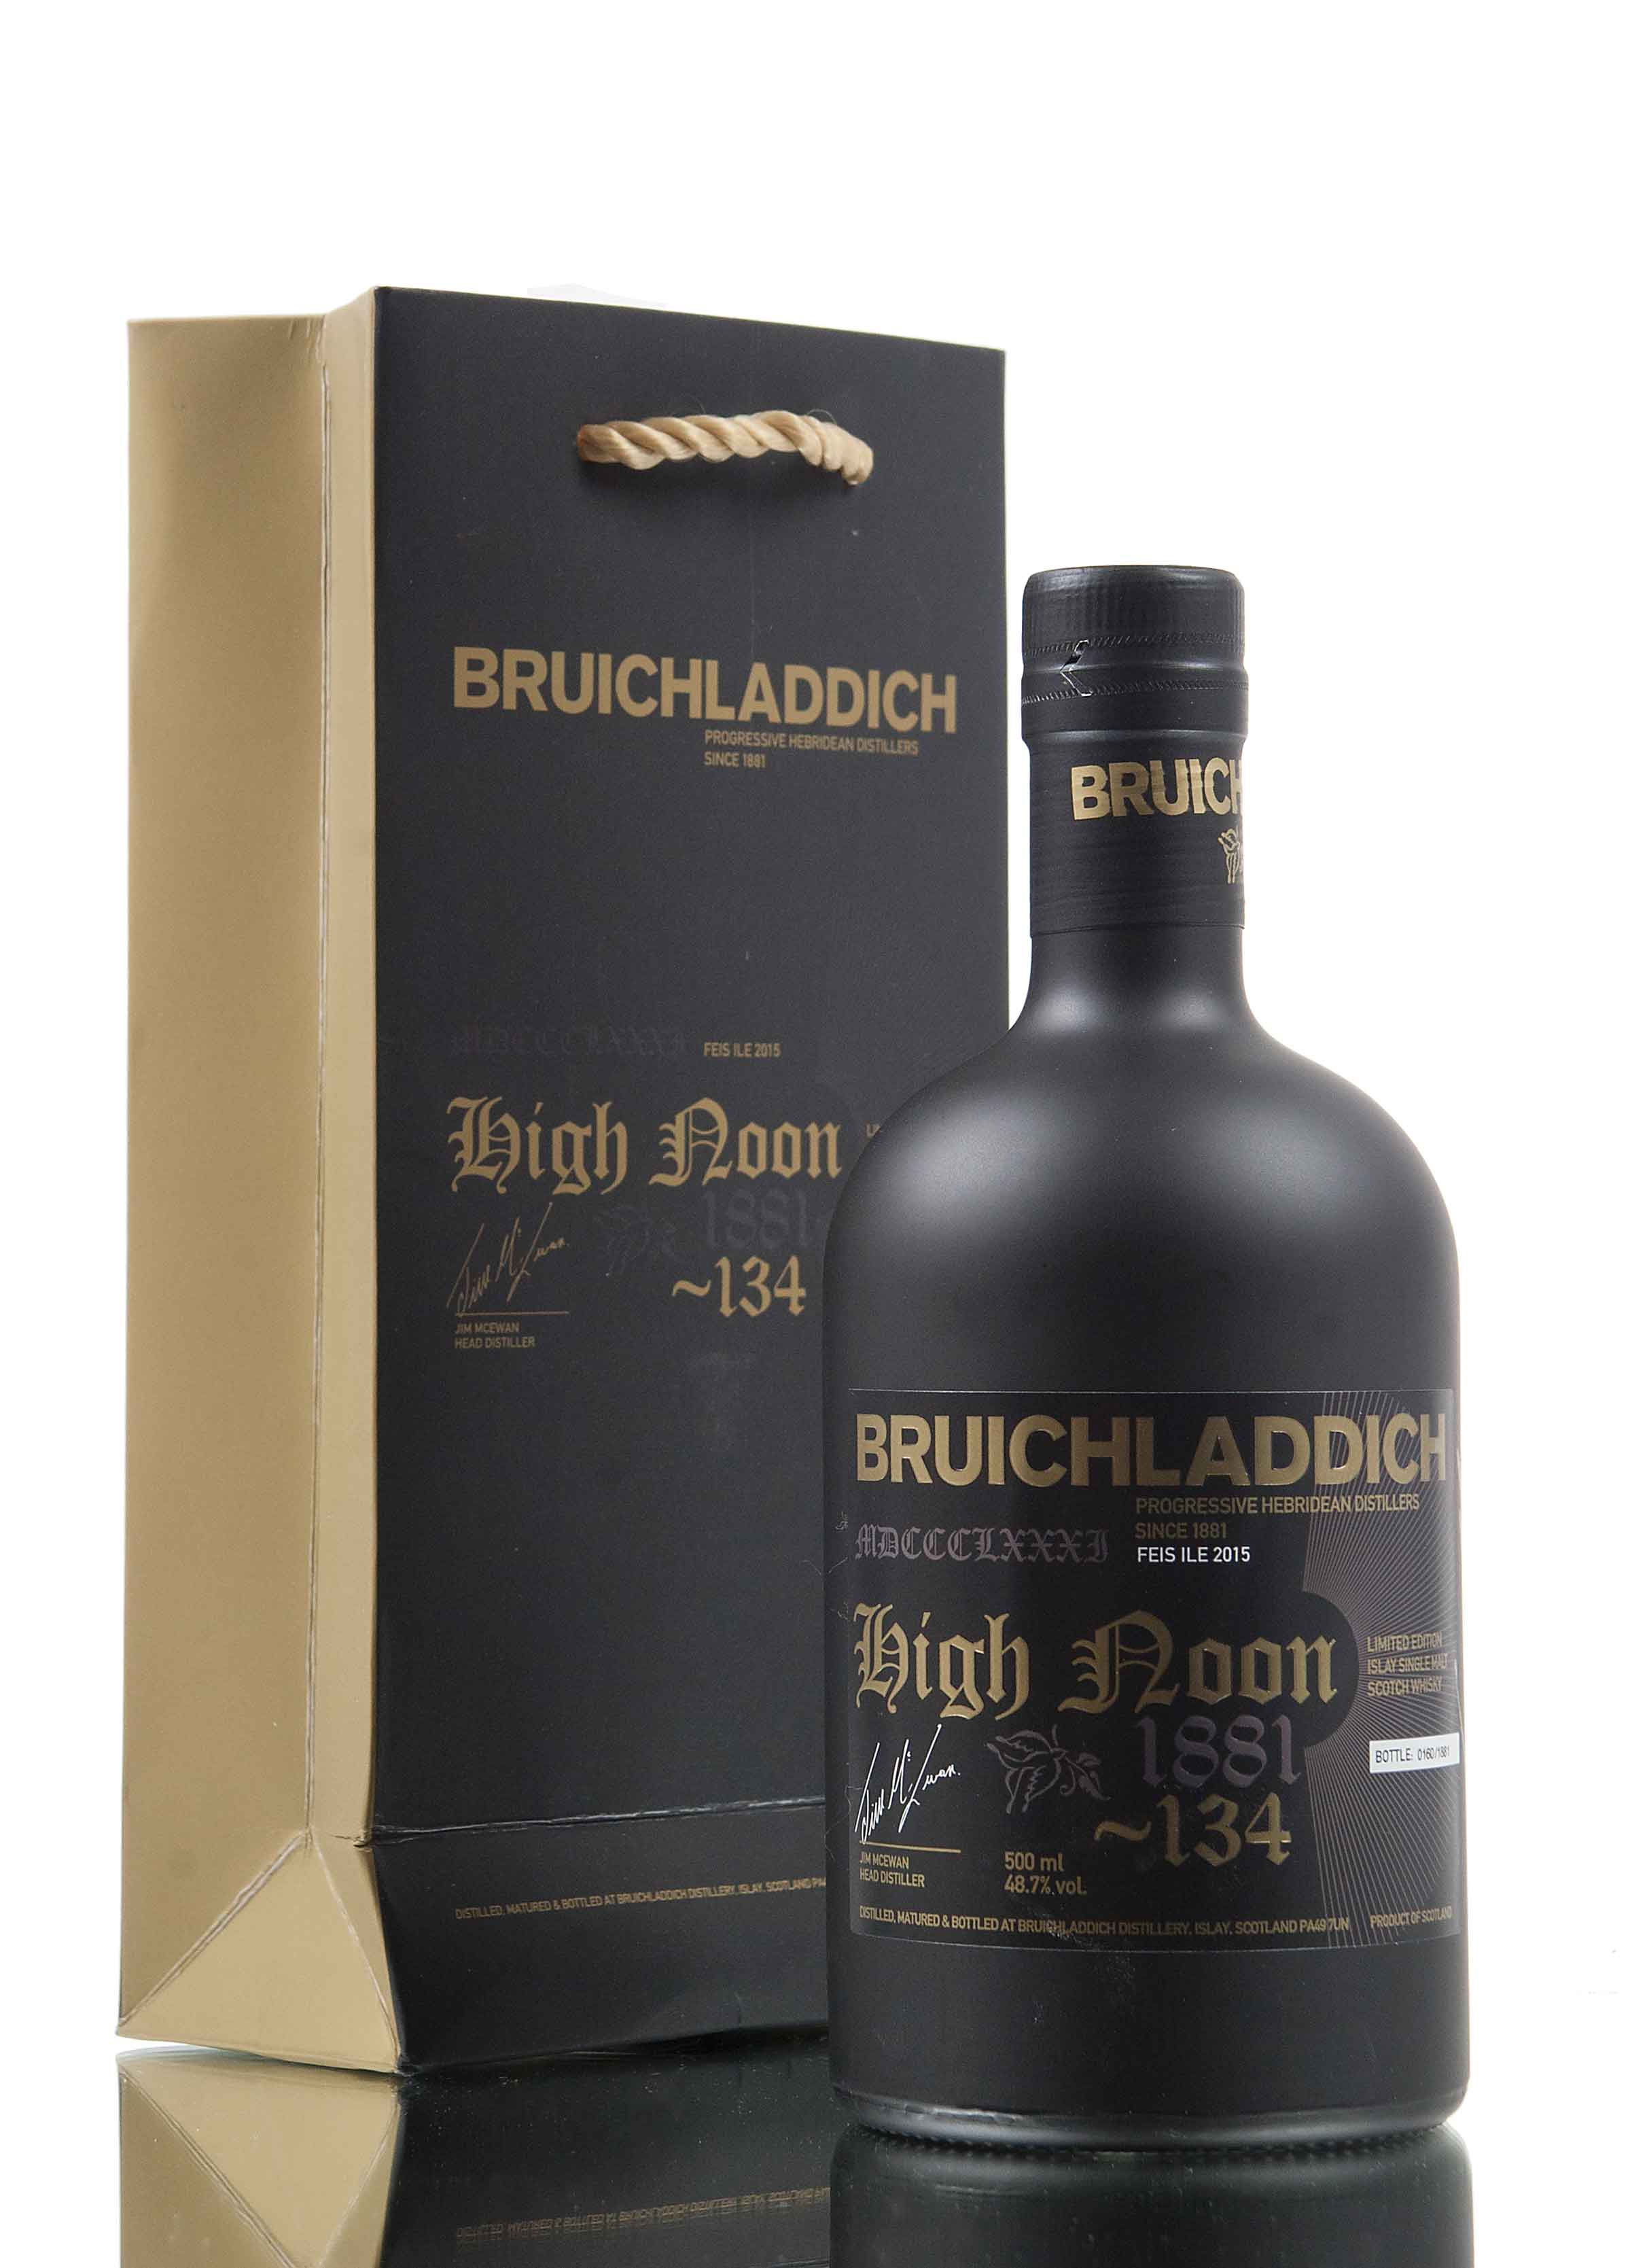 Bruichladdich High Noon Black Art Valinch / Feis Ile 2015